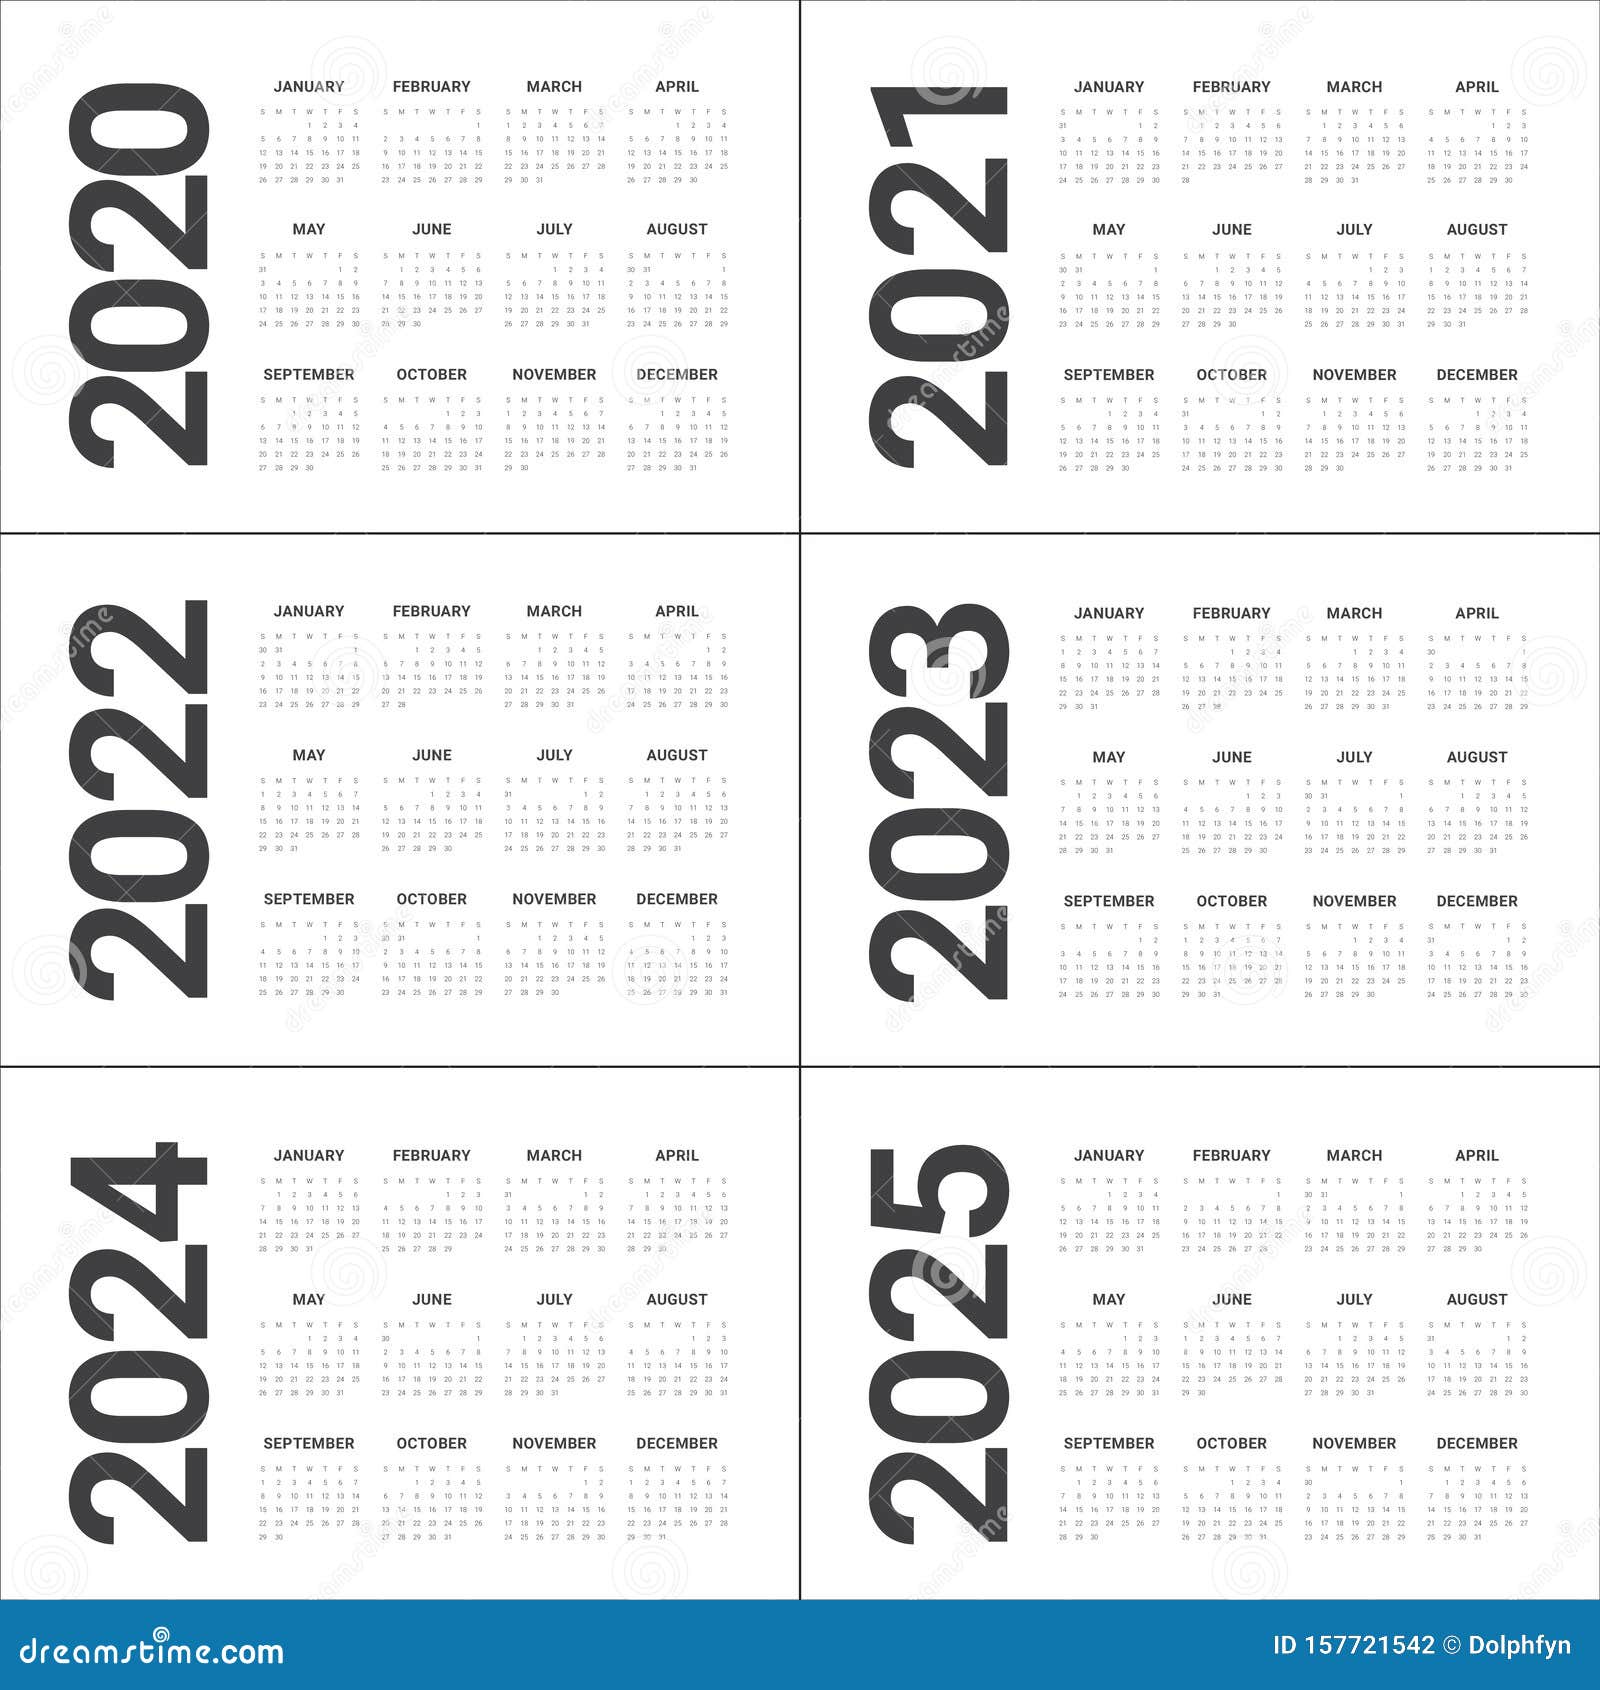 Calendar 2021 - 2025 - Calendar 2021 2022 2023 2024 2025 2026 2020 ...